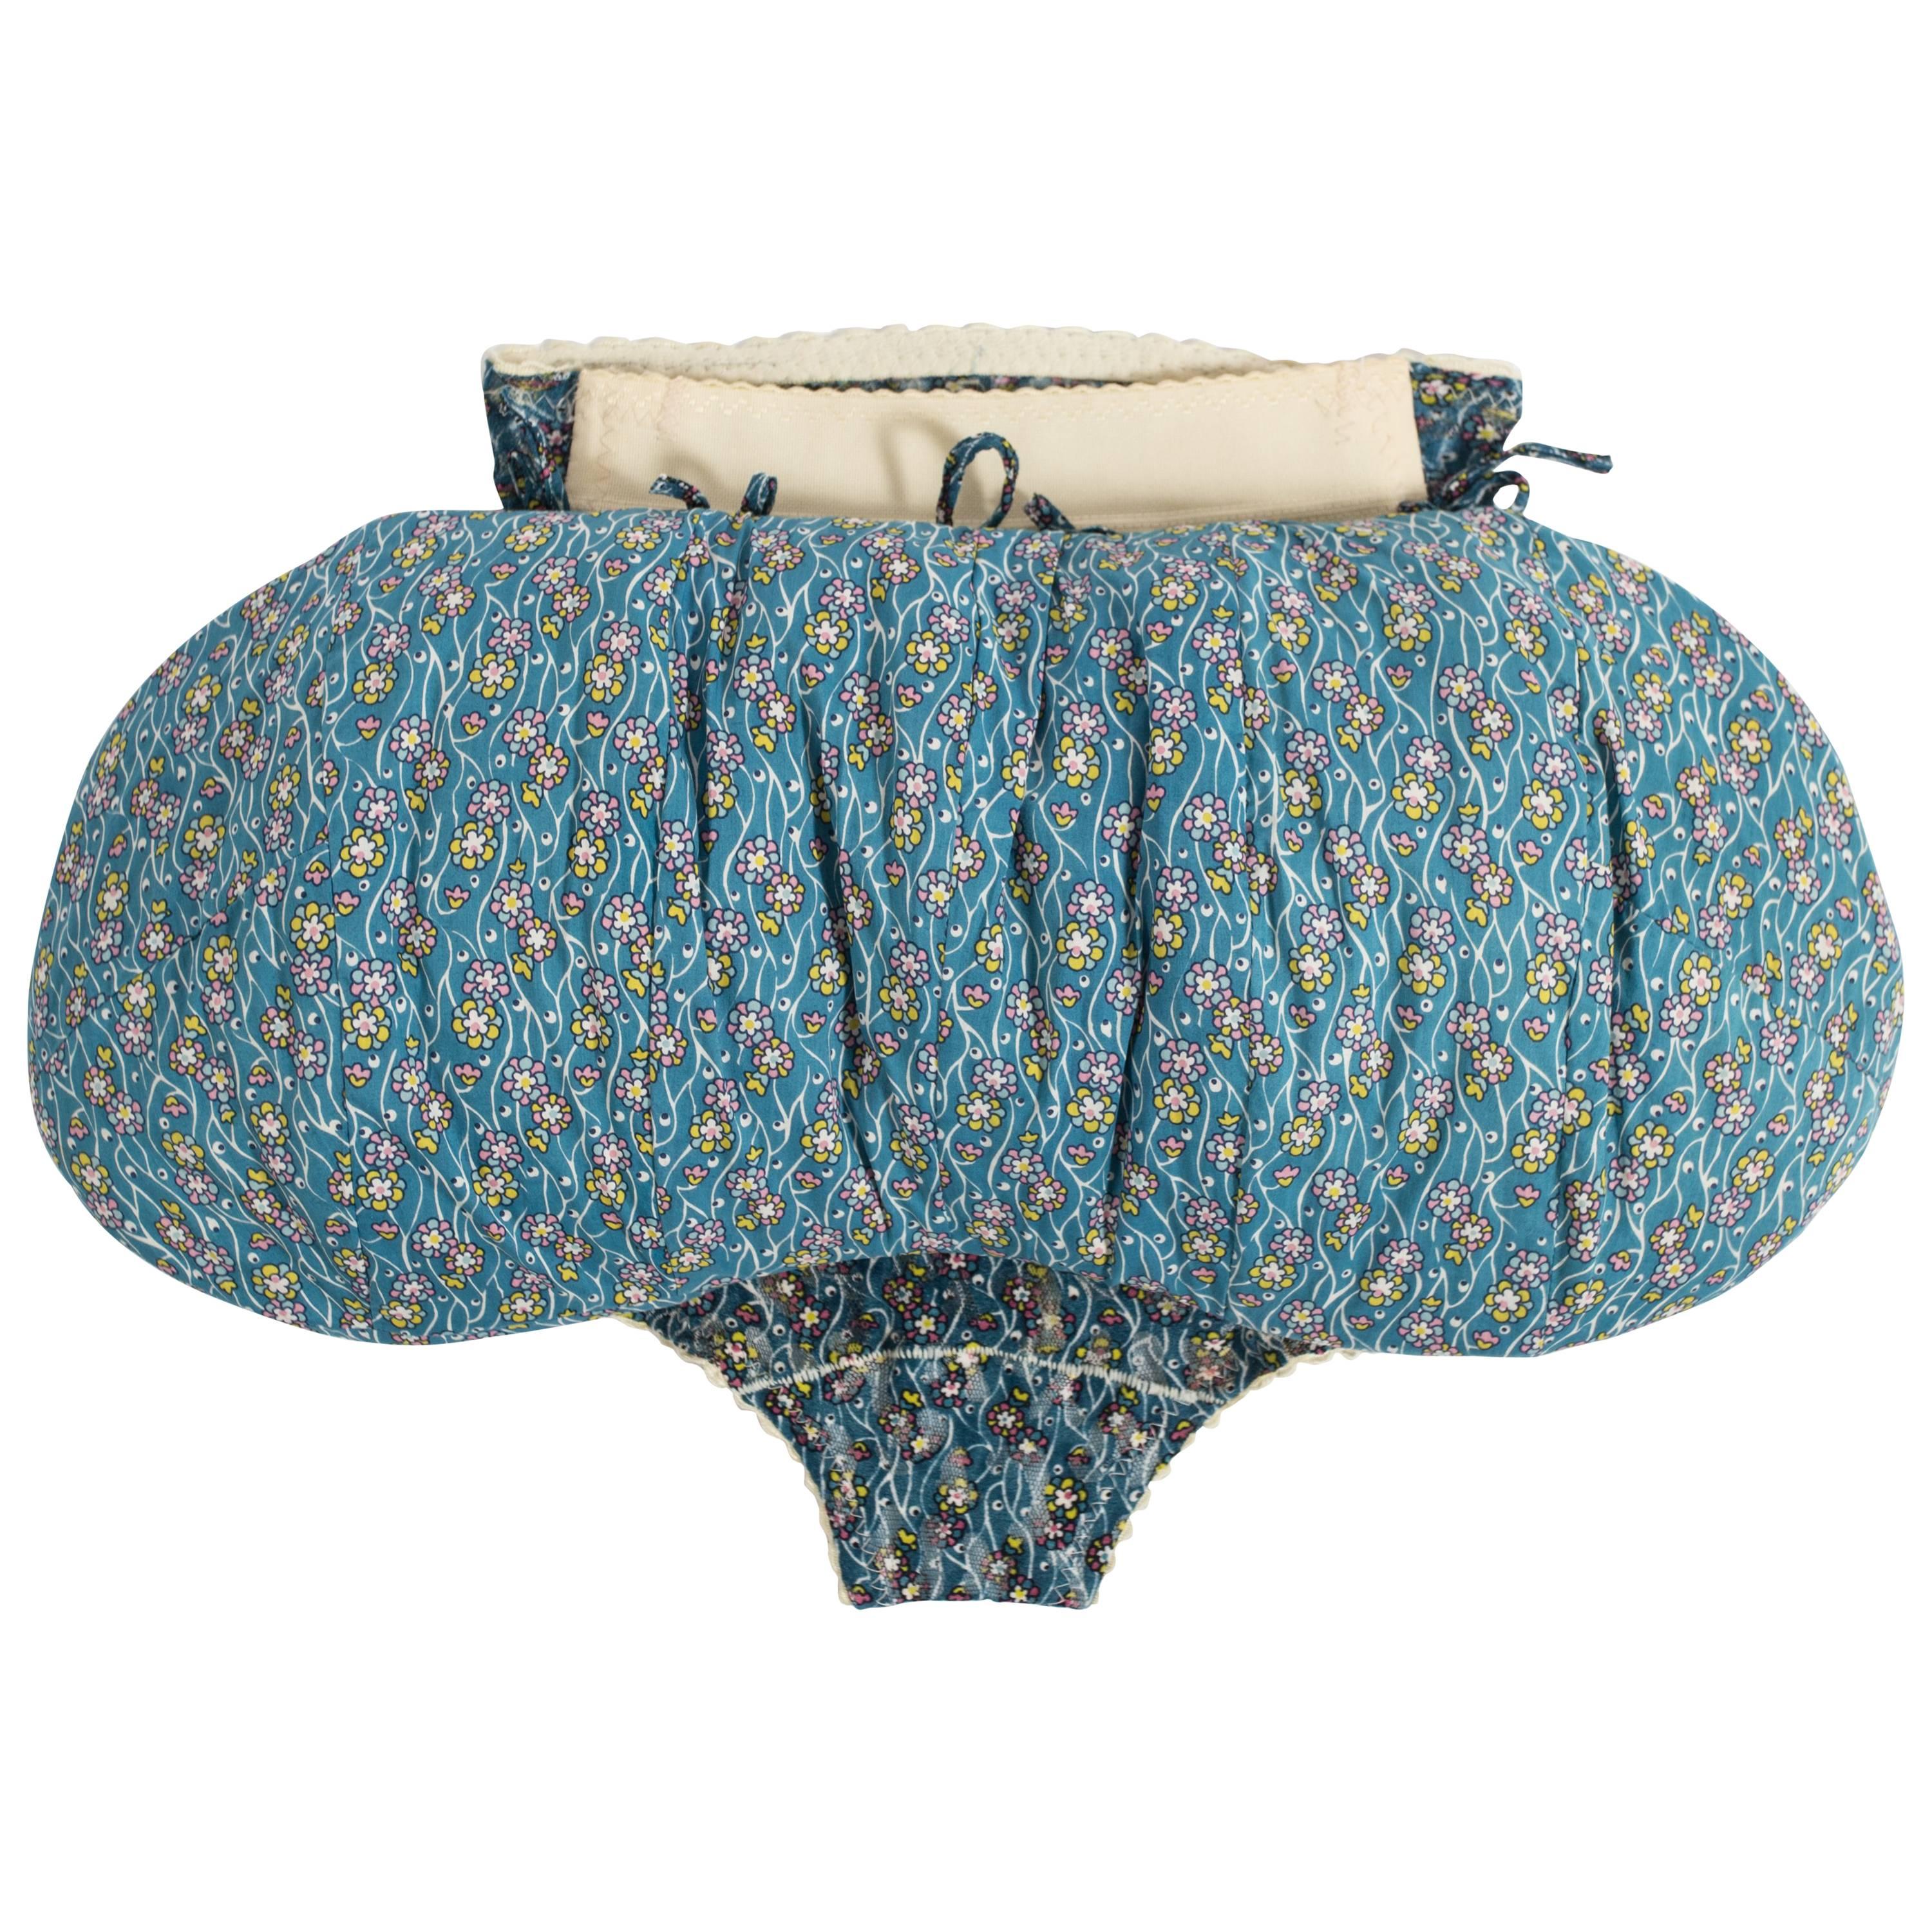 Vivienne Westwood Spring-Summer 1995 cotton bustle and undergarment set